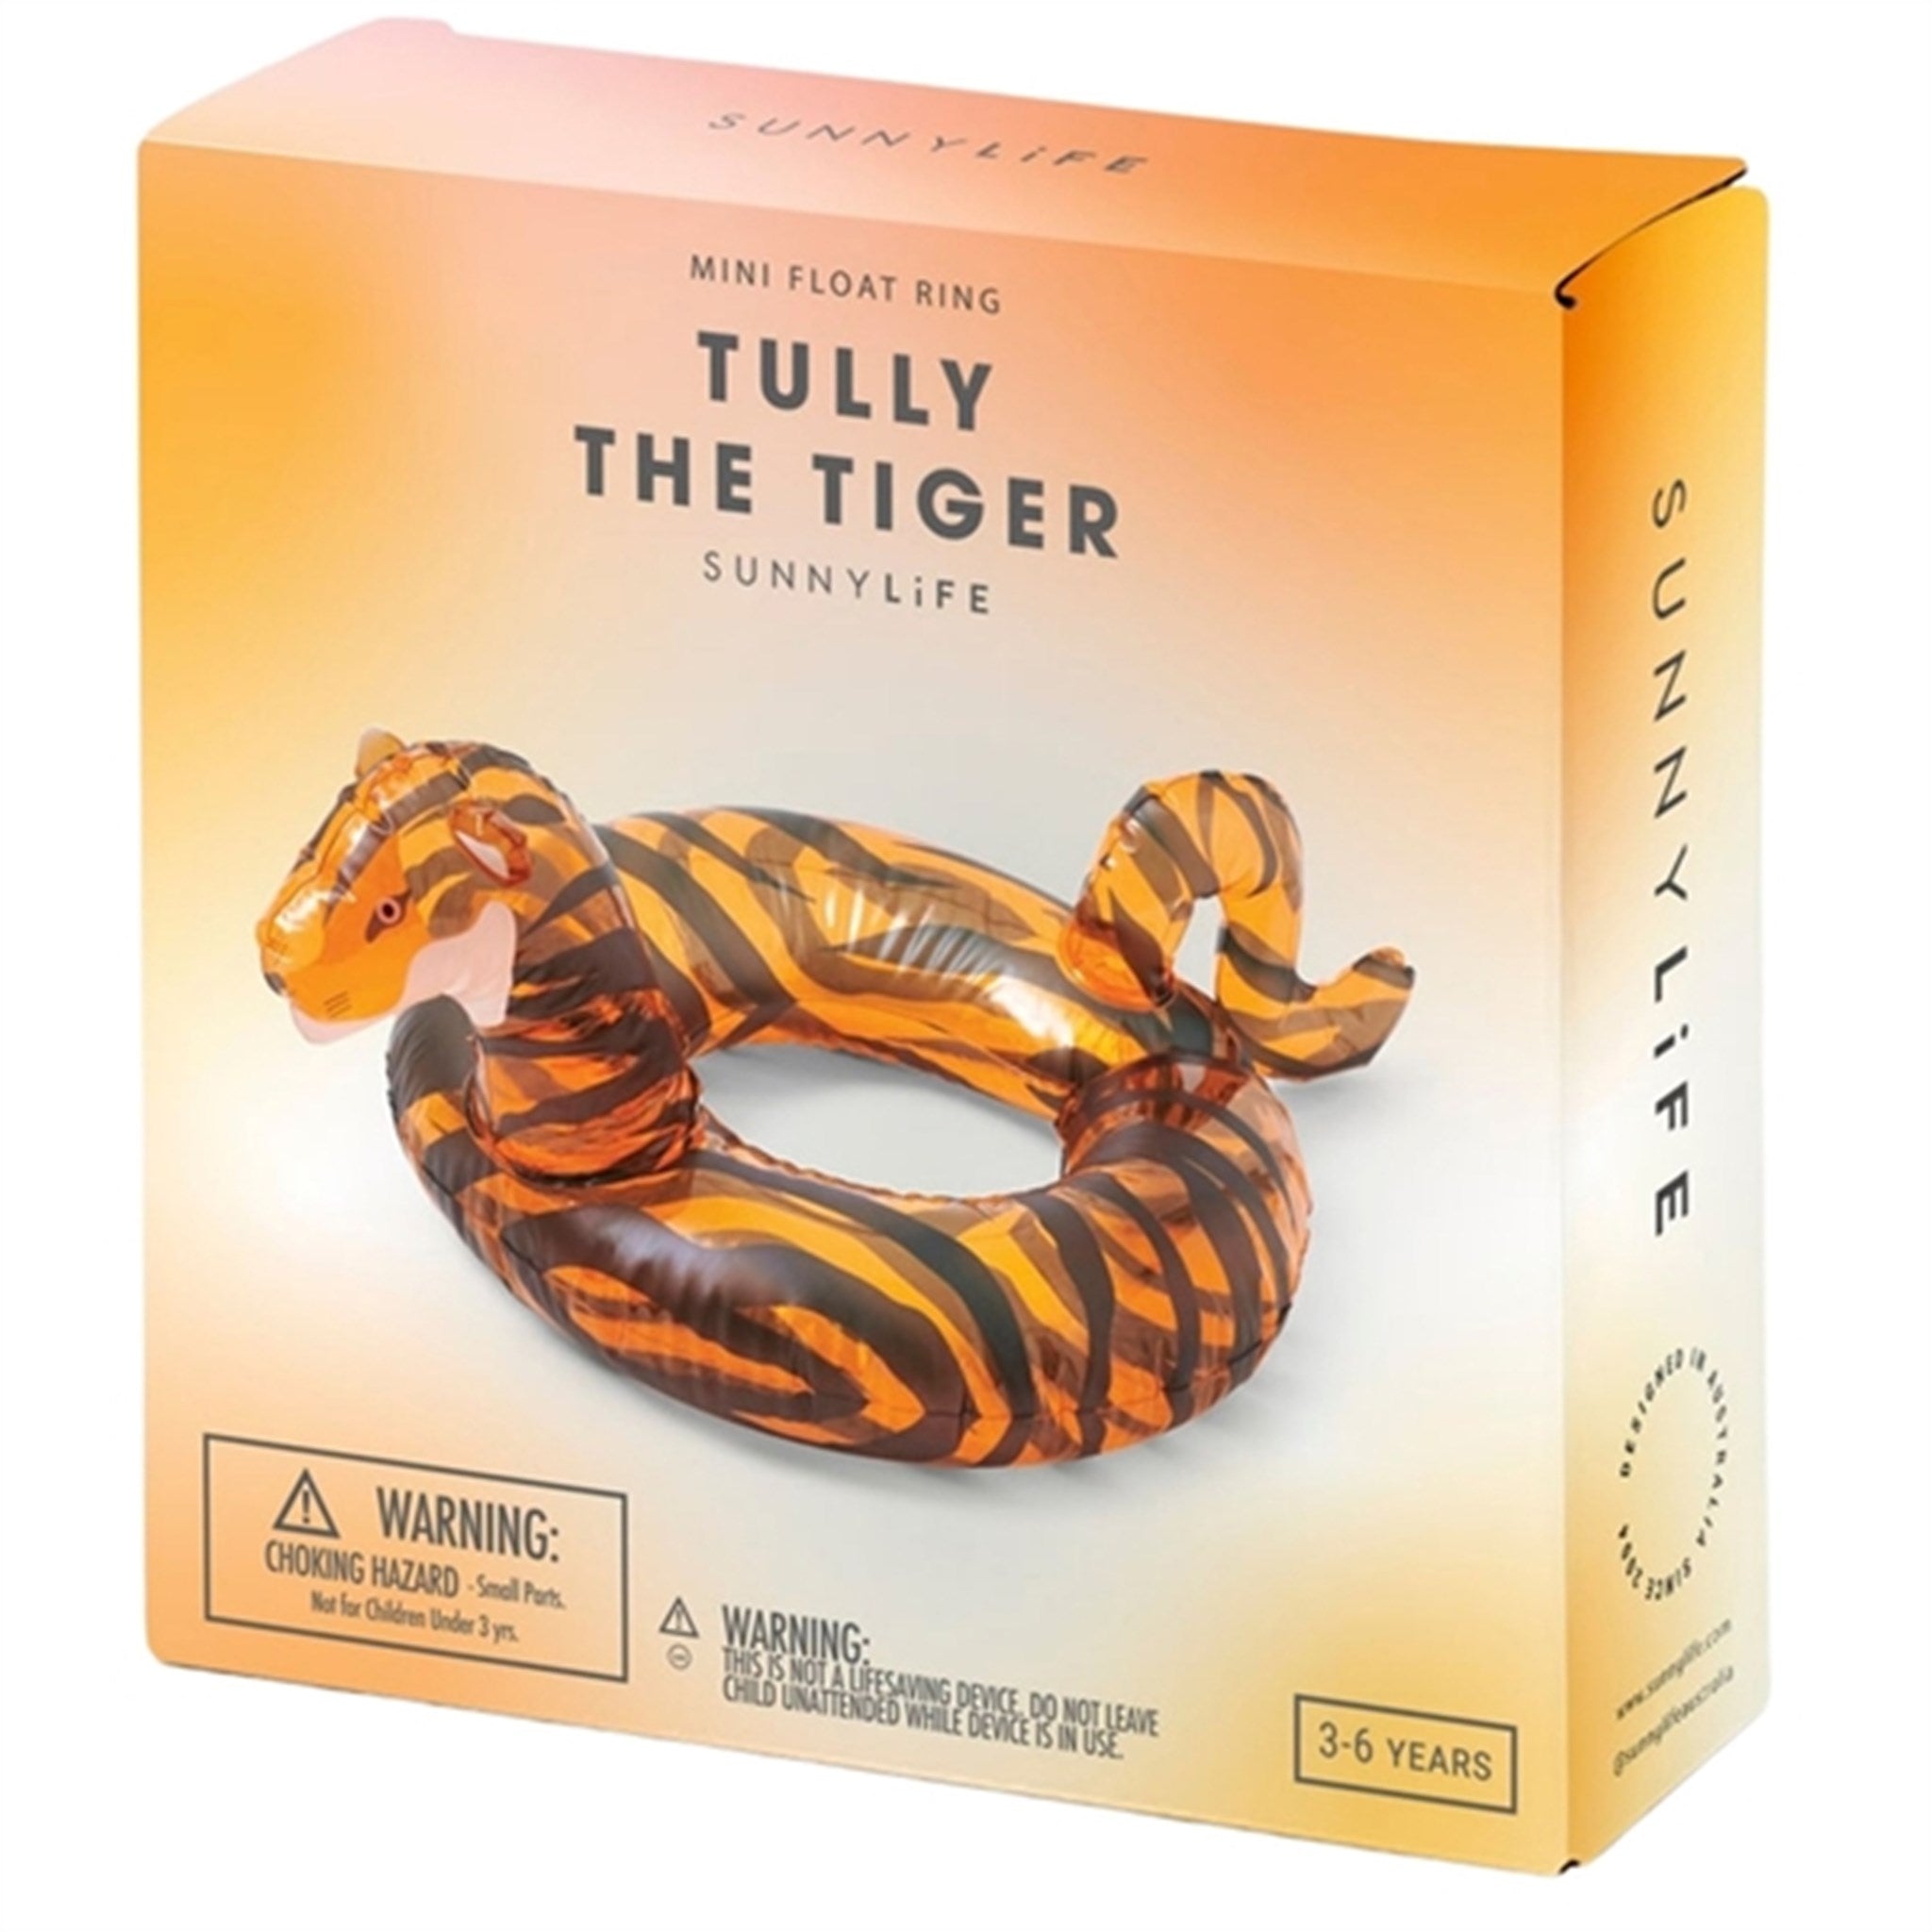 SunnyLife Mini Badering Tully the Tiger 3